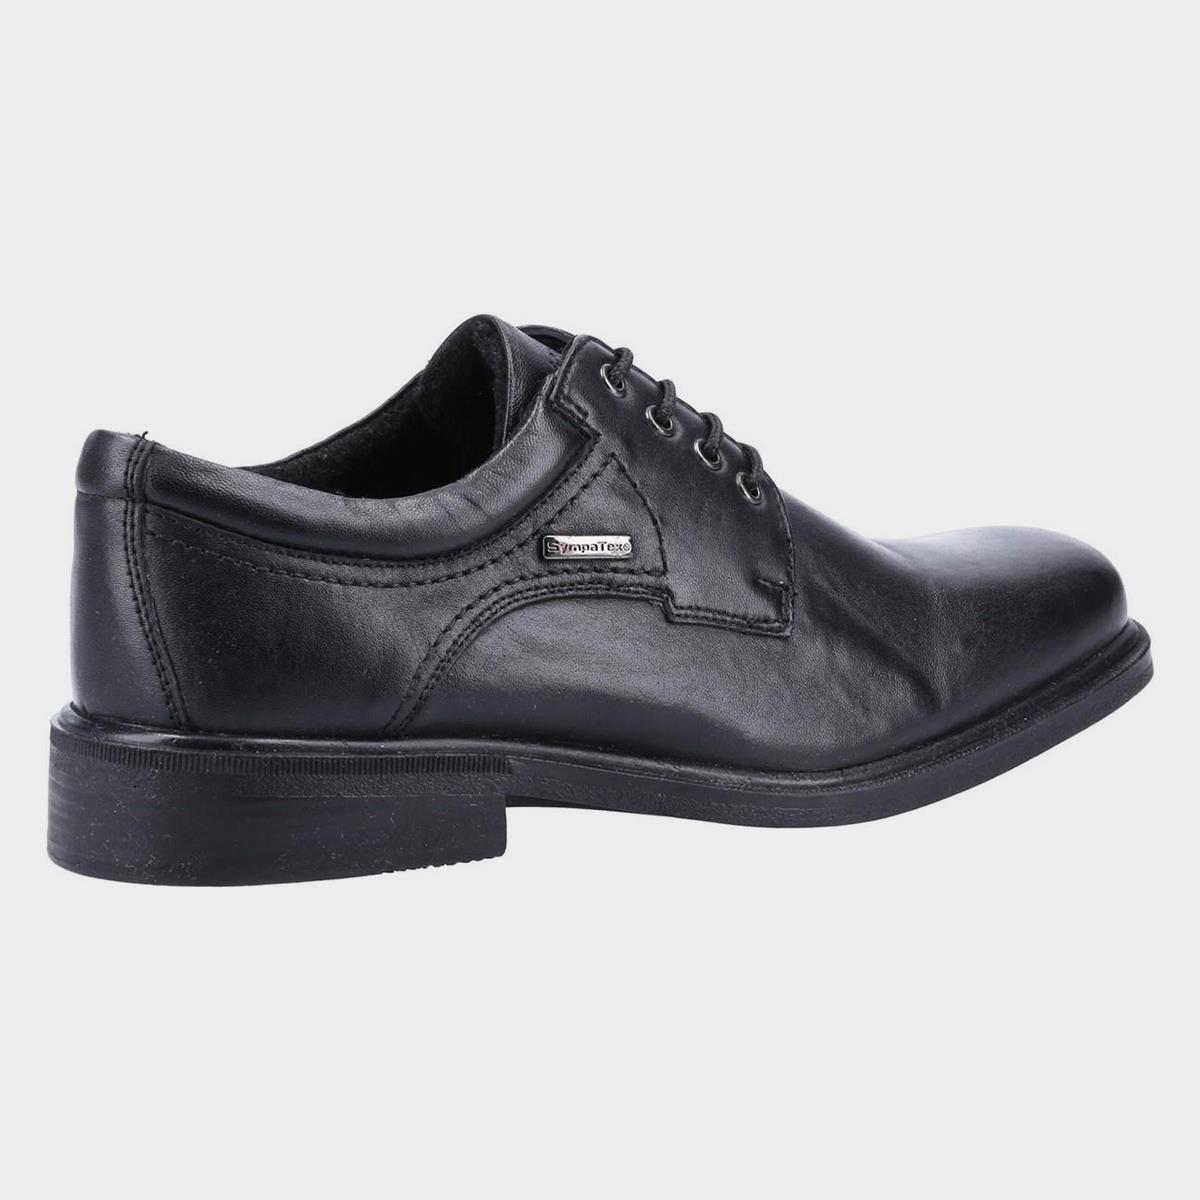 Cotswold Sudeley black leather waterproof men's lace-up shoe 